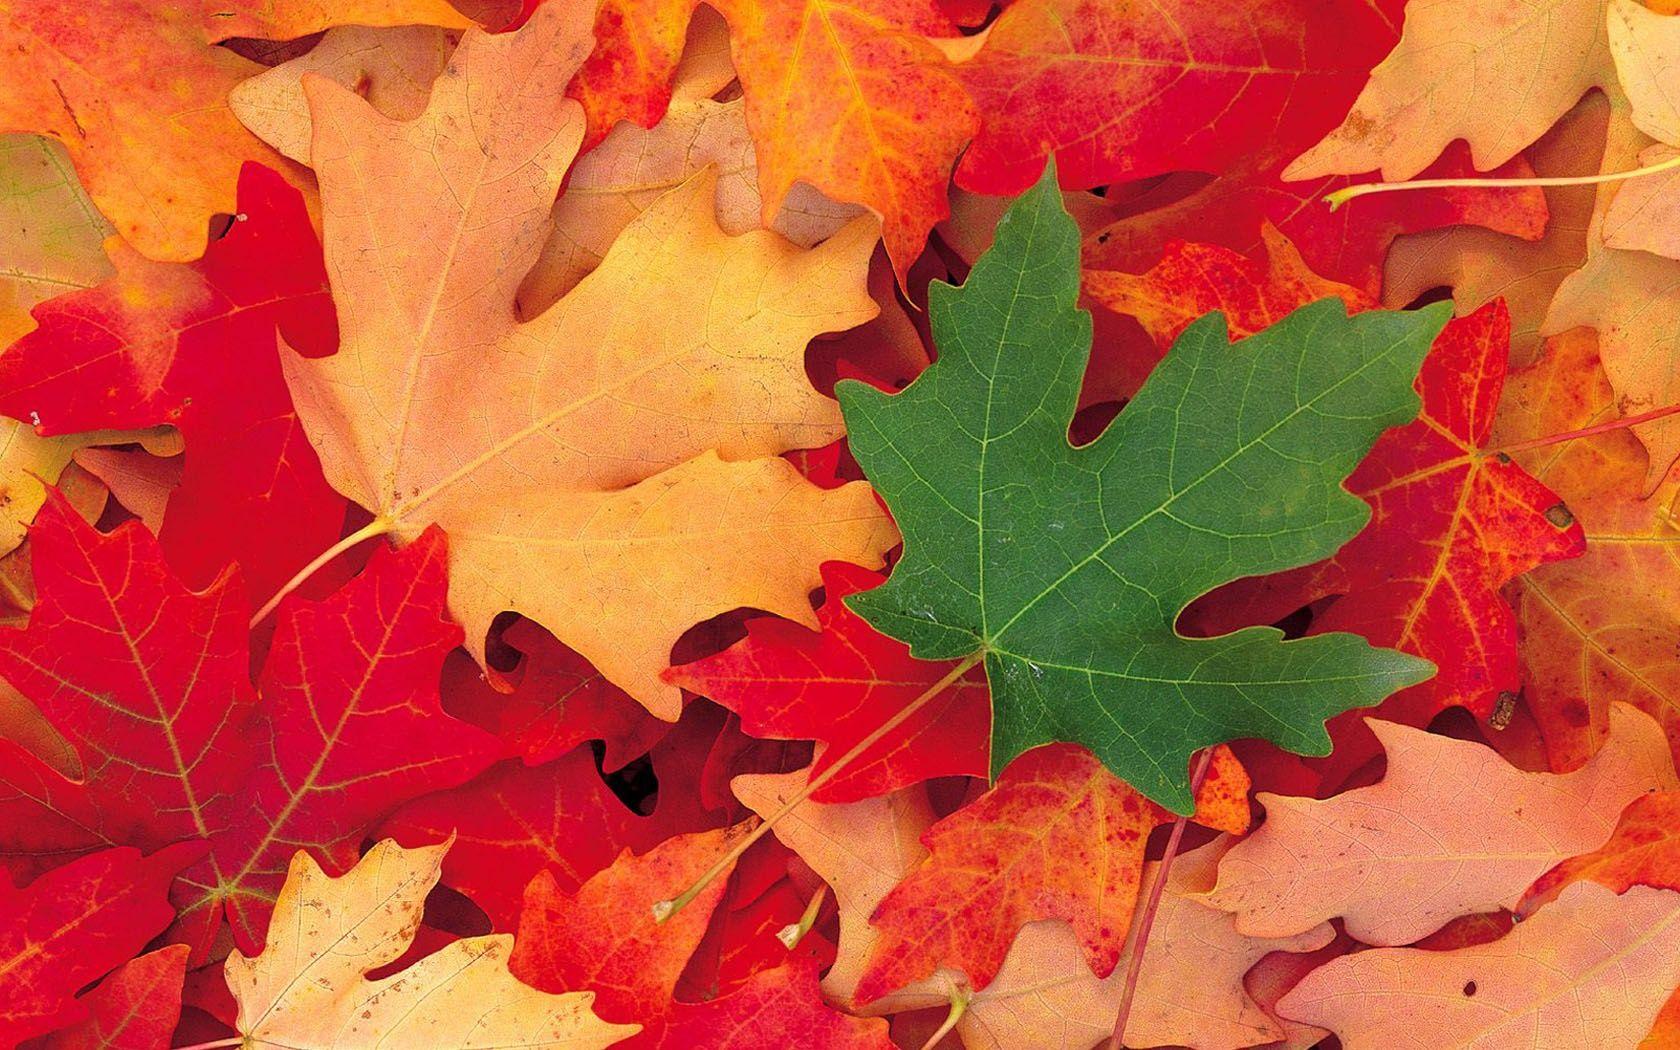 Maple Leaf Wide Hd Wallpaper Download Maple Leaf Image Free.jpeg